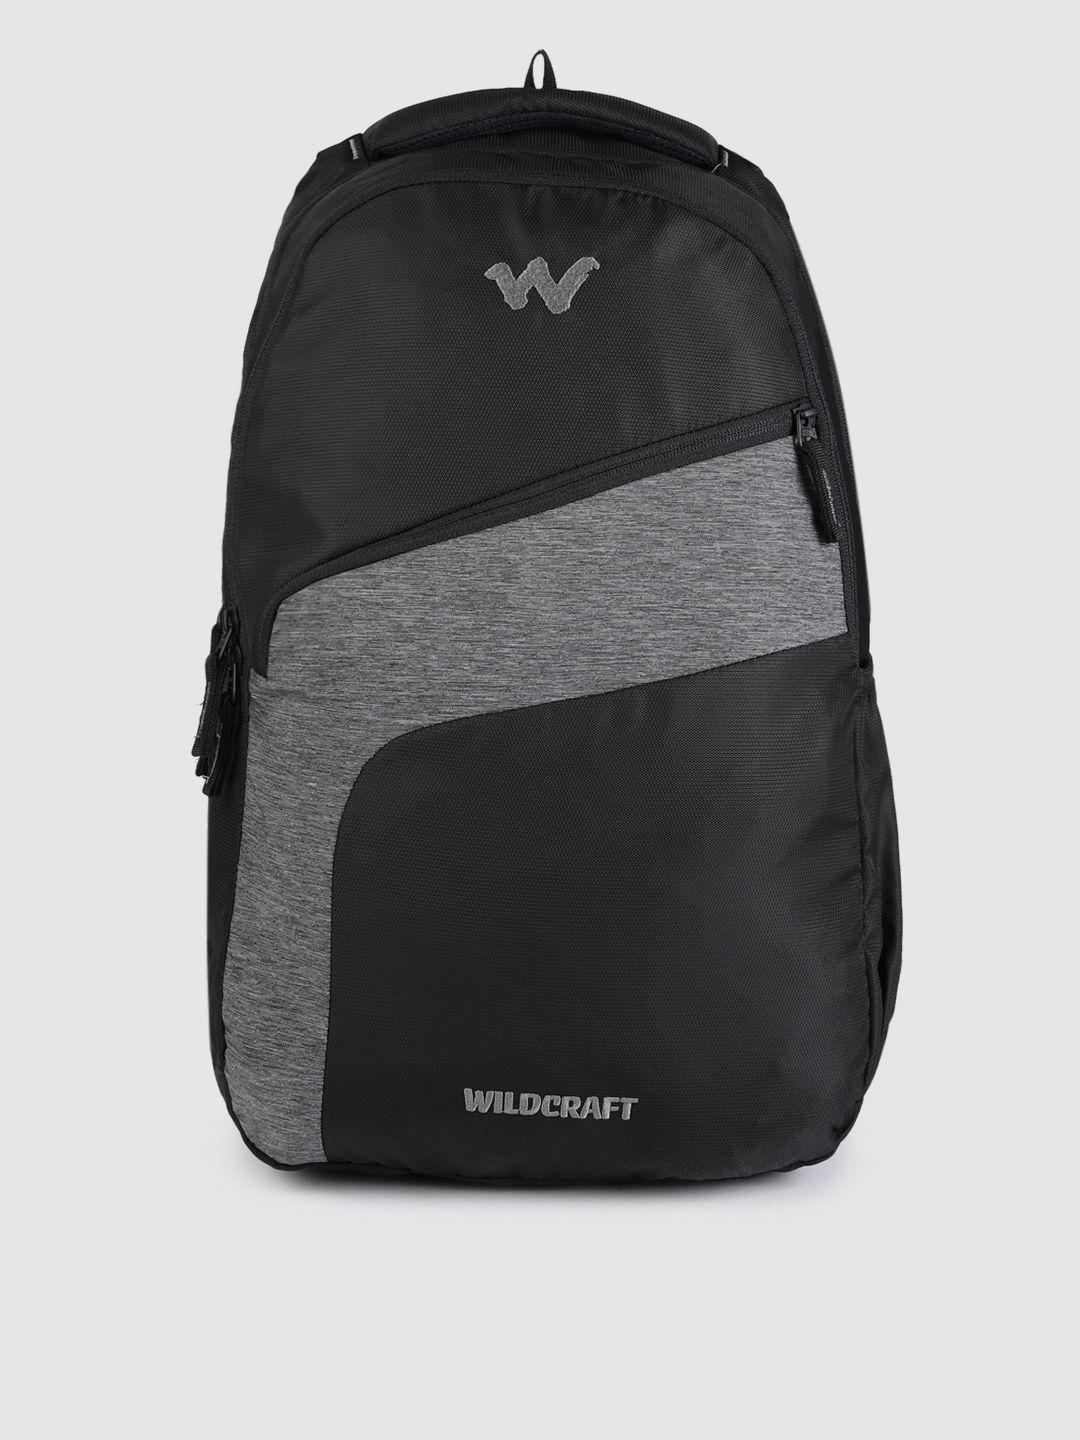 Wildcraft Unisex Black & Grey Colorblocked Backpack Price in India